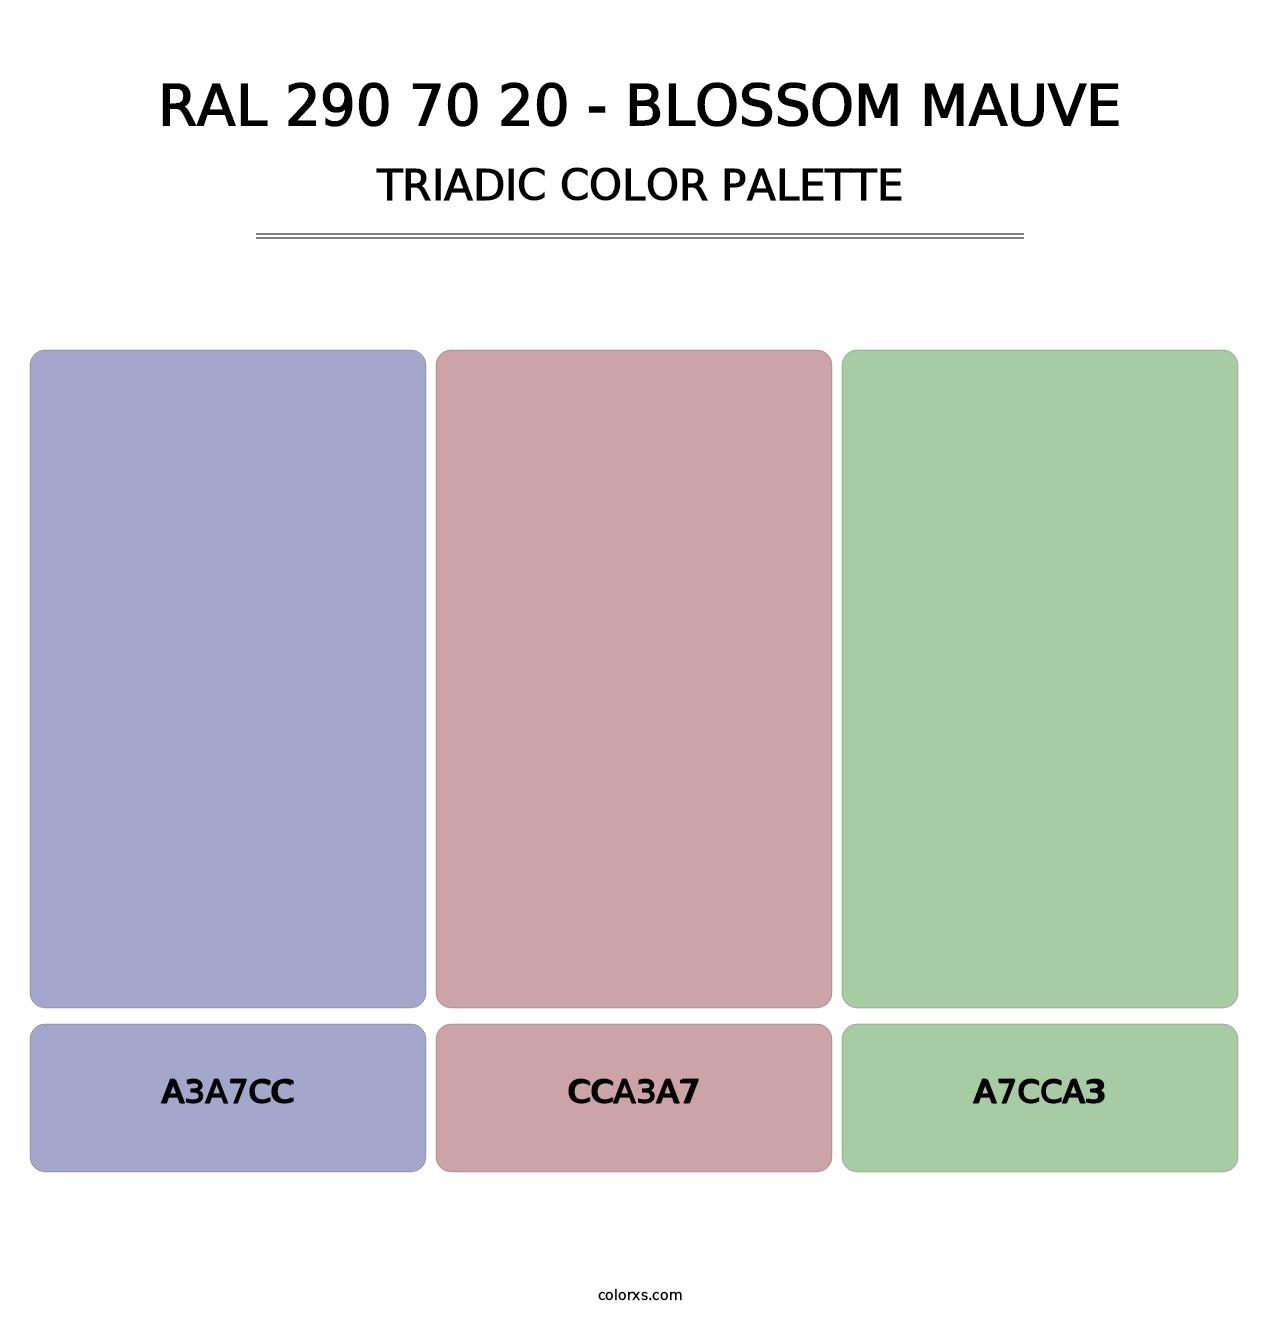 RAL 290 70 20 - Blossom Mauve - Triadic Color Palette